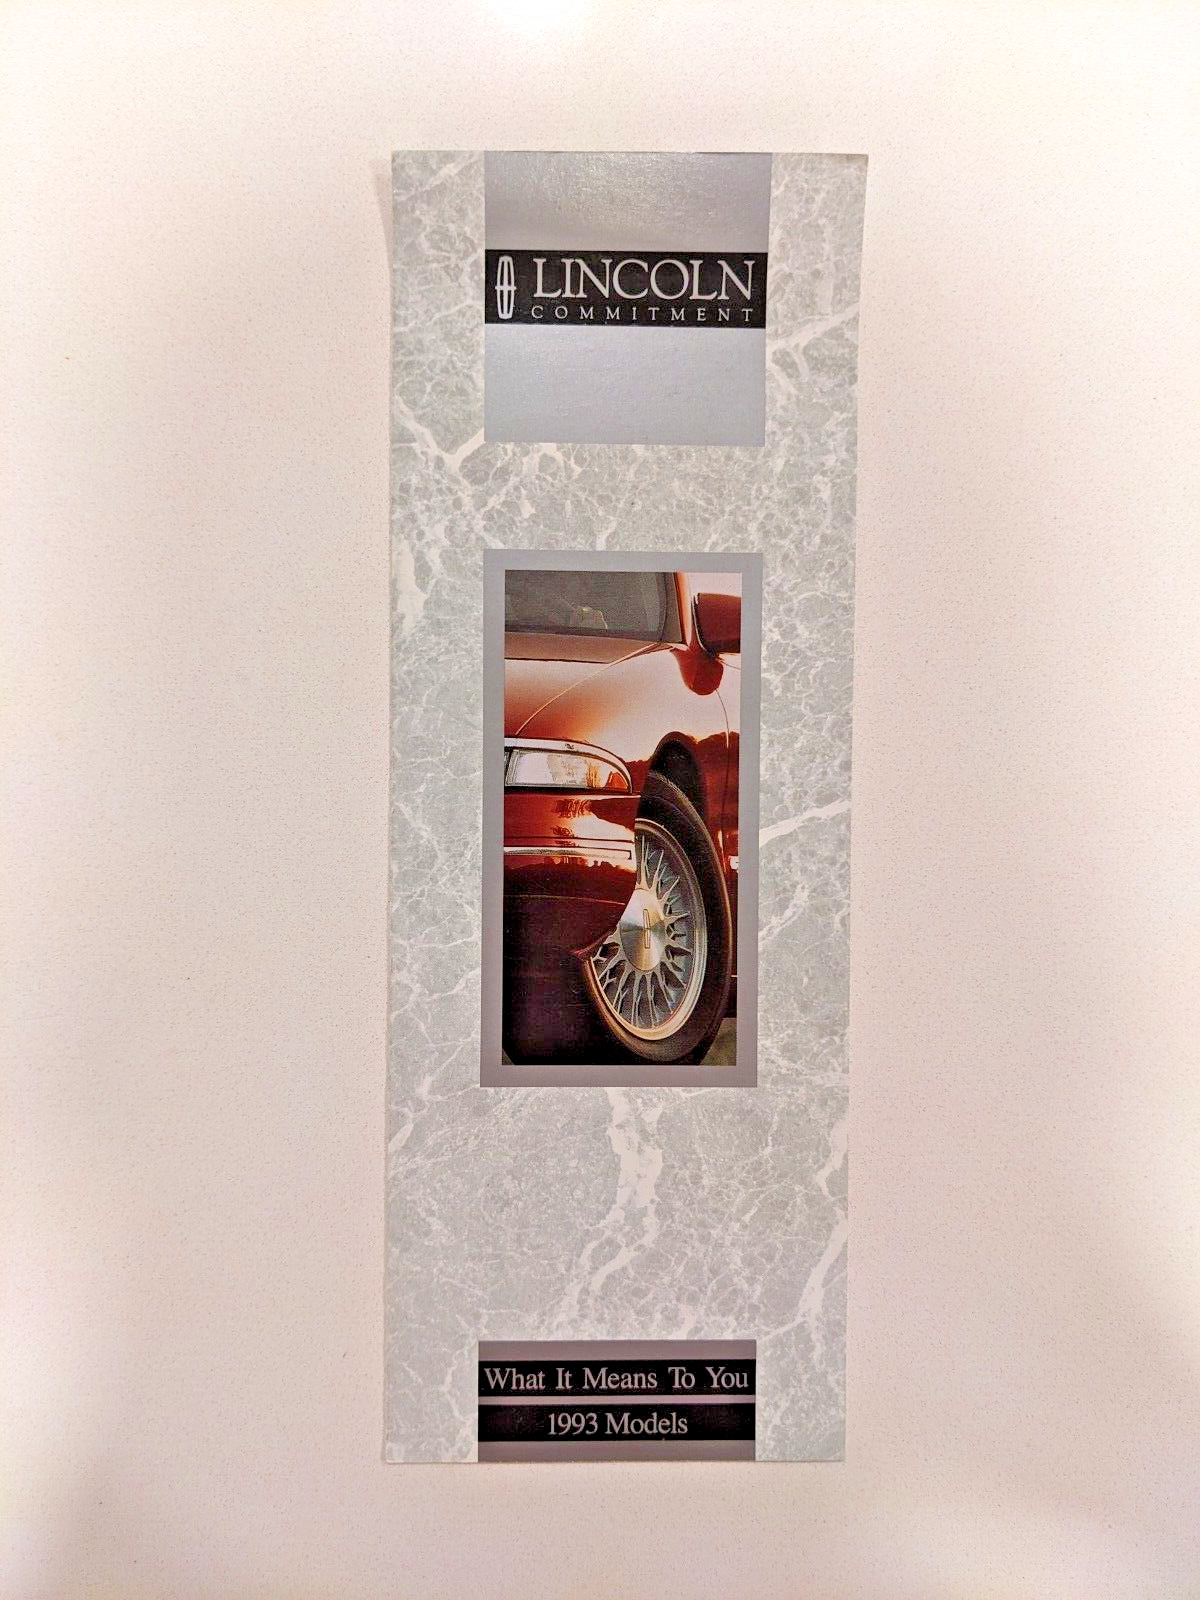 Original 1993 Lincoln Commitment Sales Brochure 94